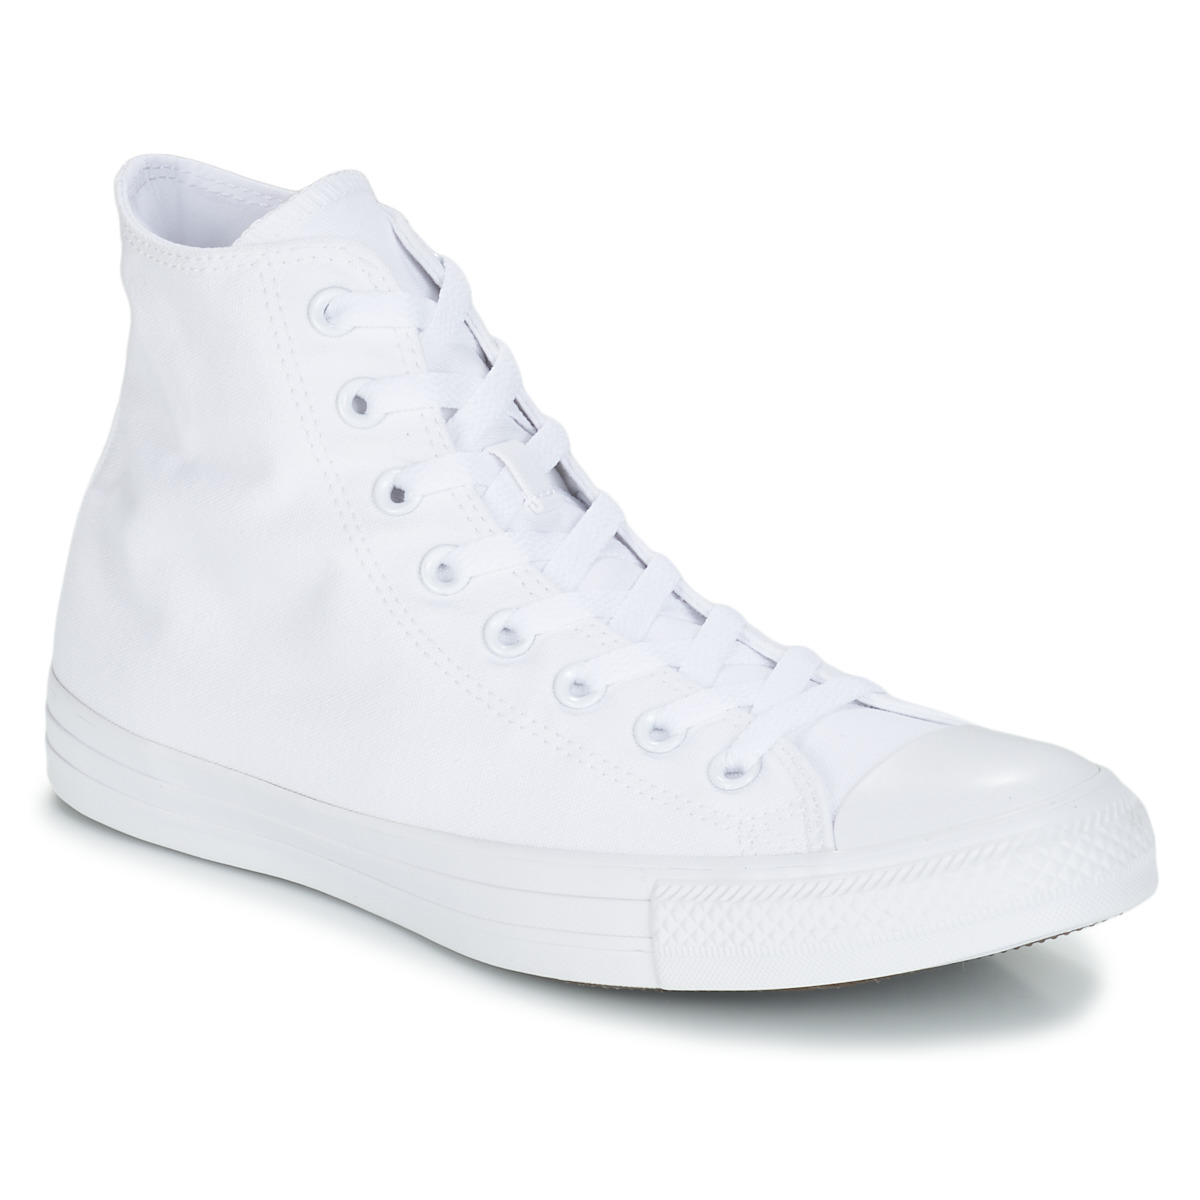 Shoes Hi top trainers Converse ALL STAR MONOCHROME HI White